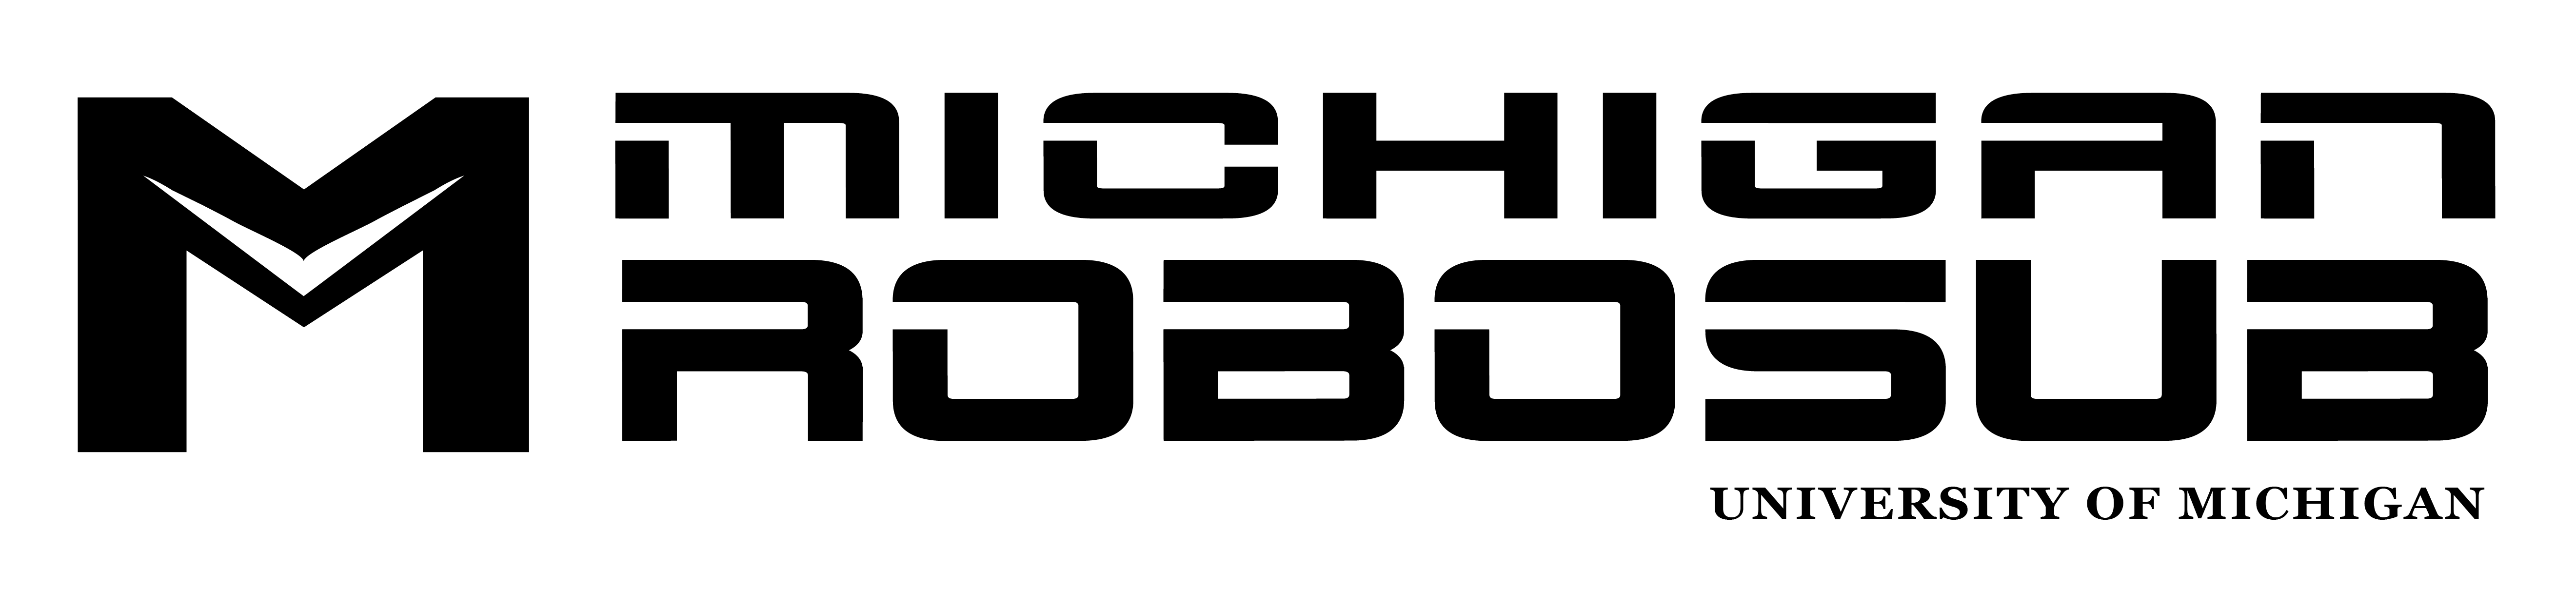 rsub-logo